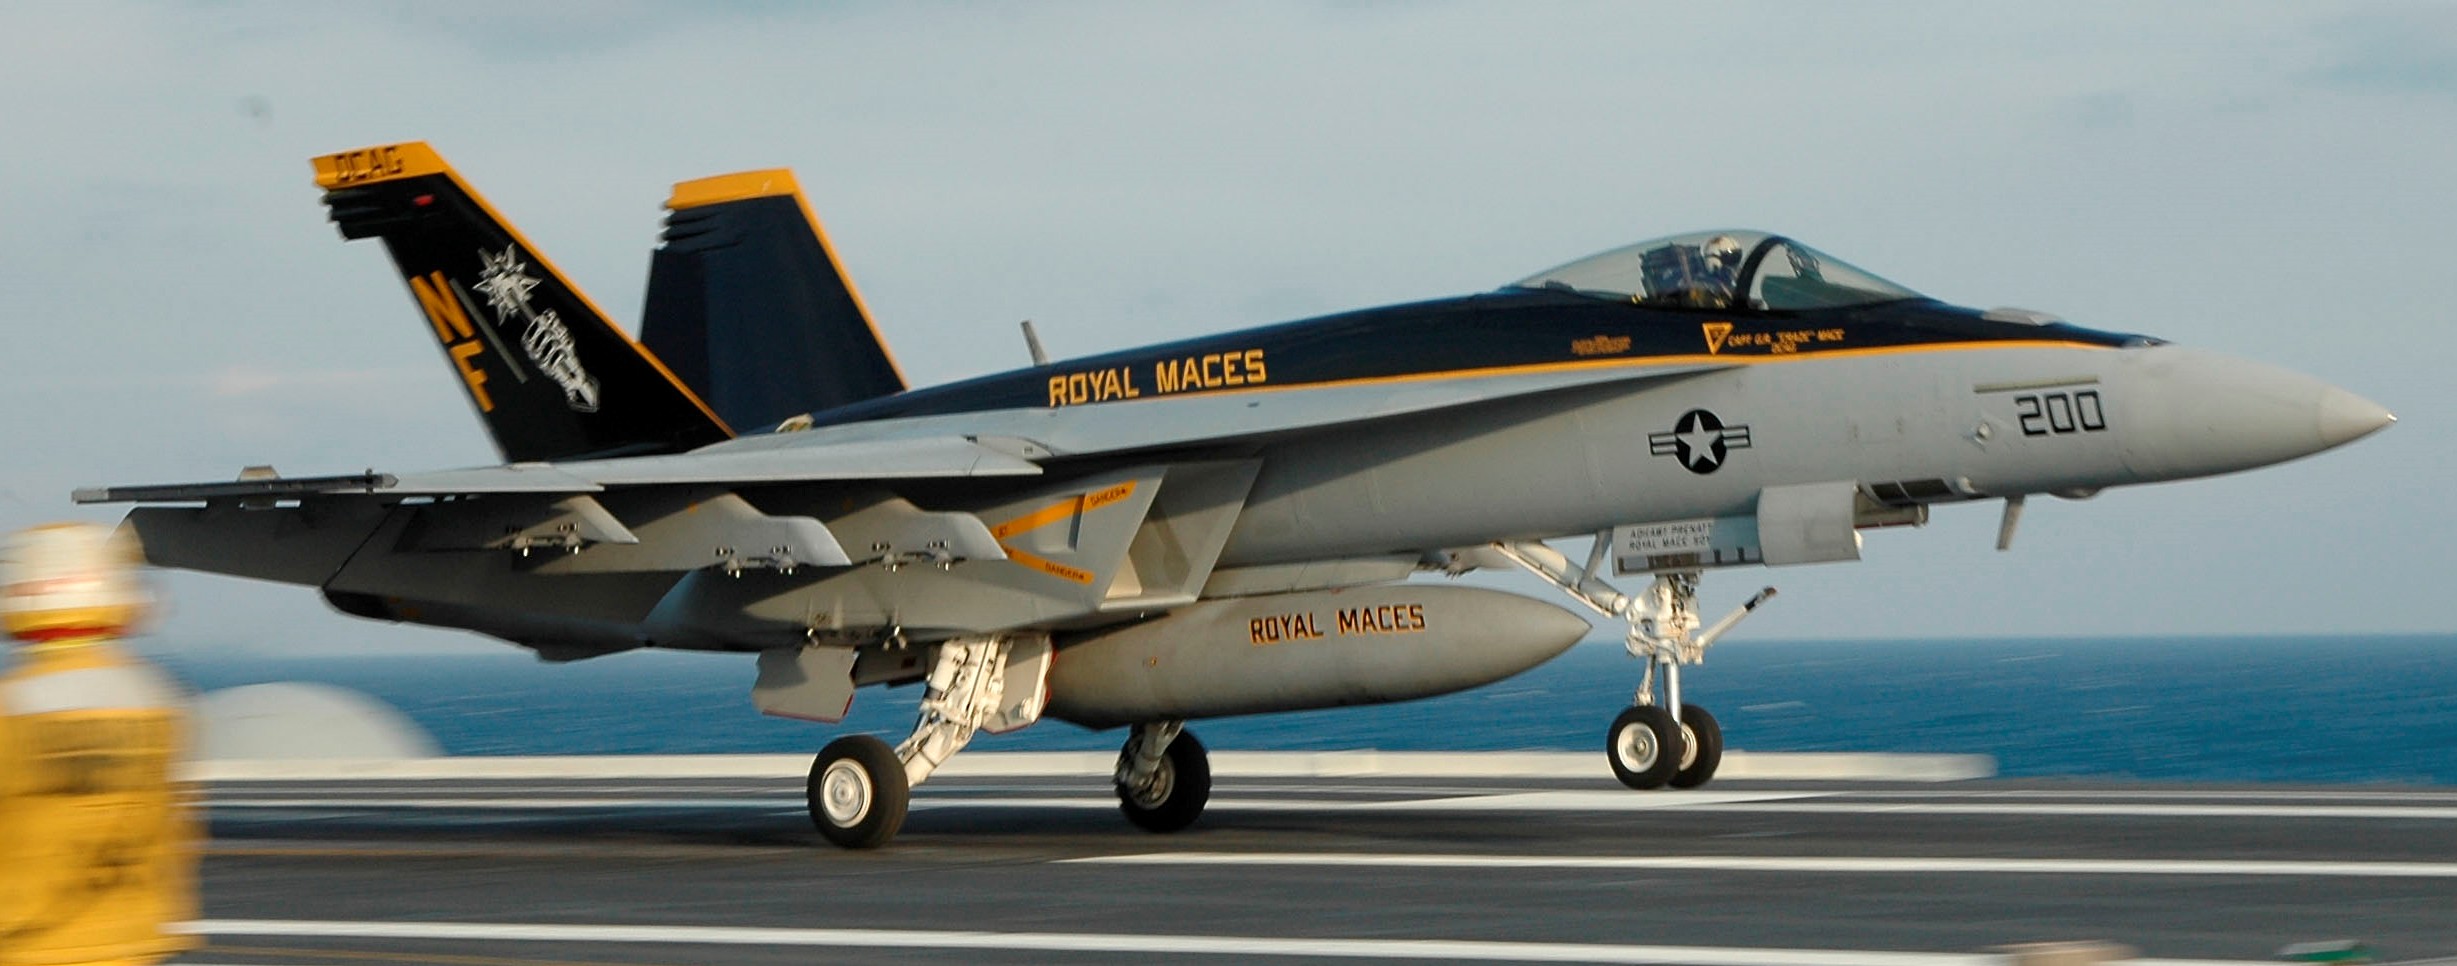 vfa-27 royal maces strike fighter squadron f/a-18e super hornet cv-63 uss kitty hawk cvw-5 us navy 175p